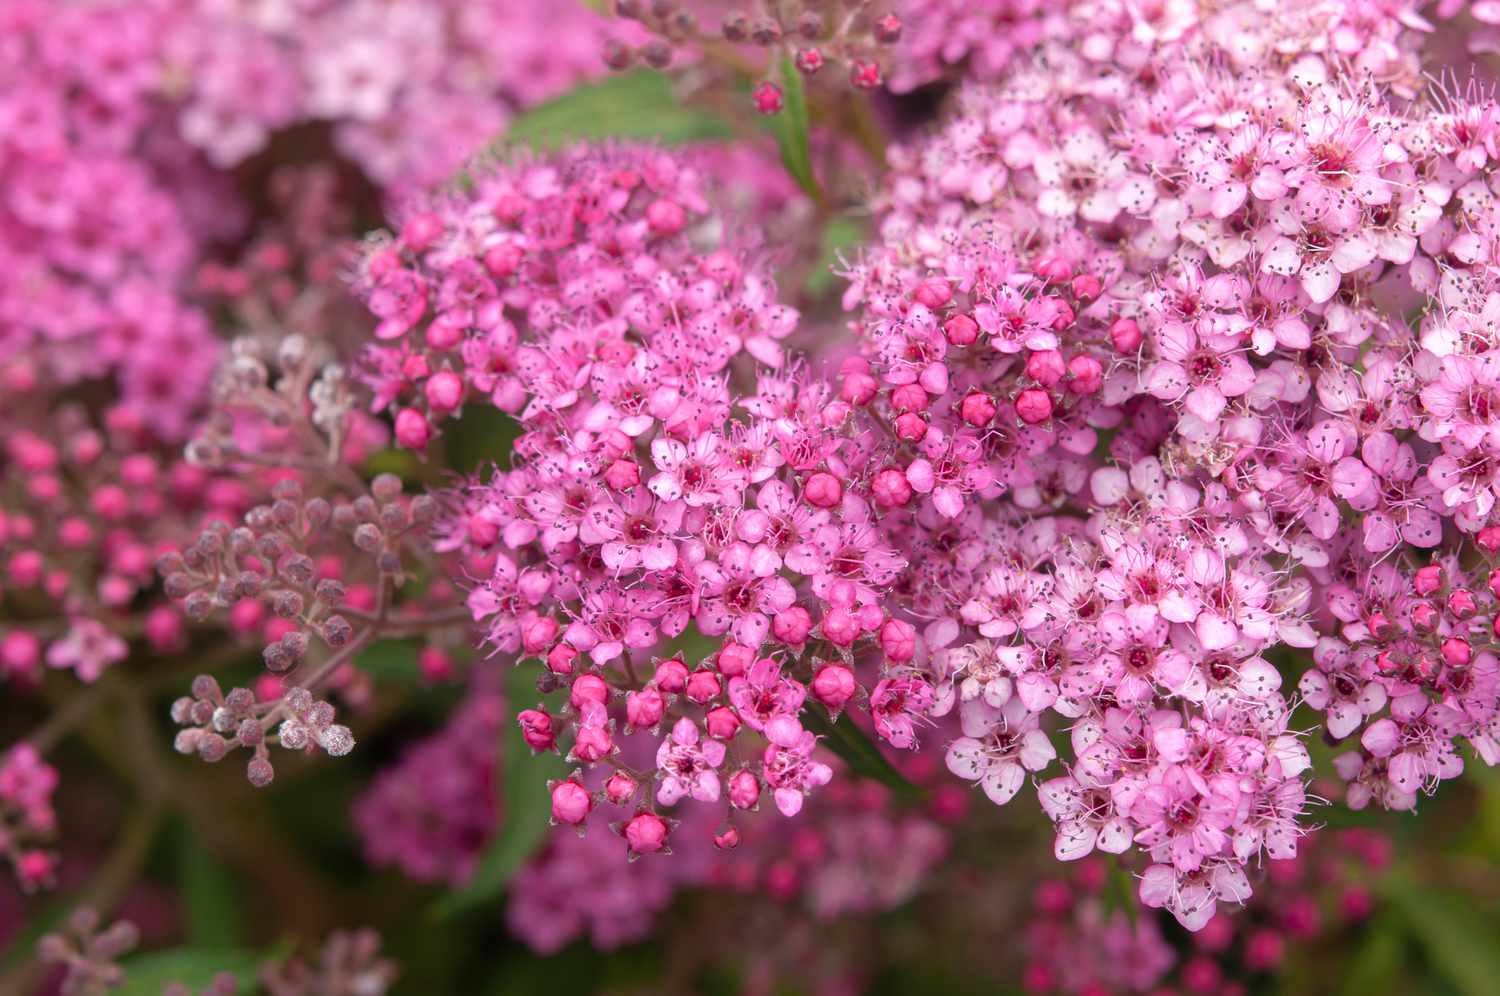 Spiraea shrub with pink flowers closeup